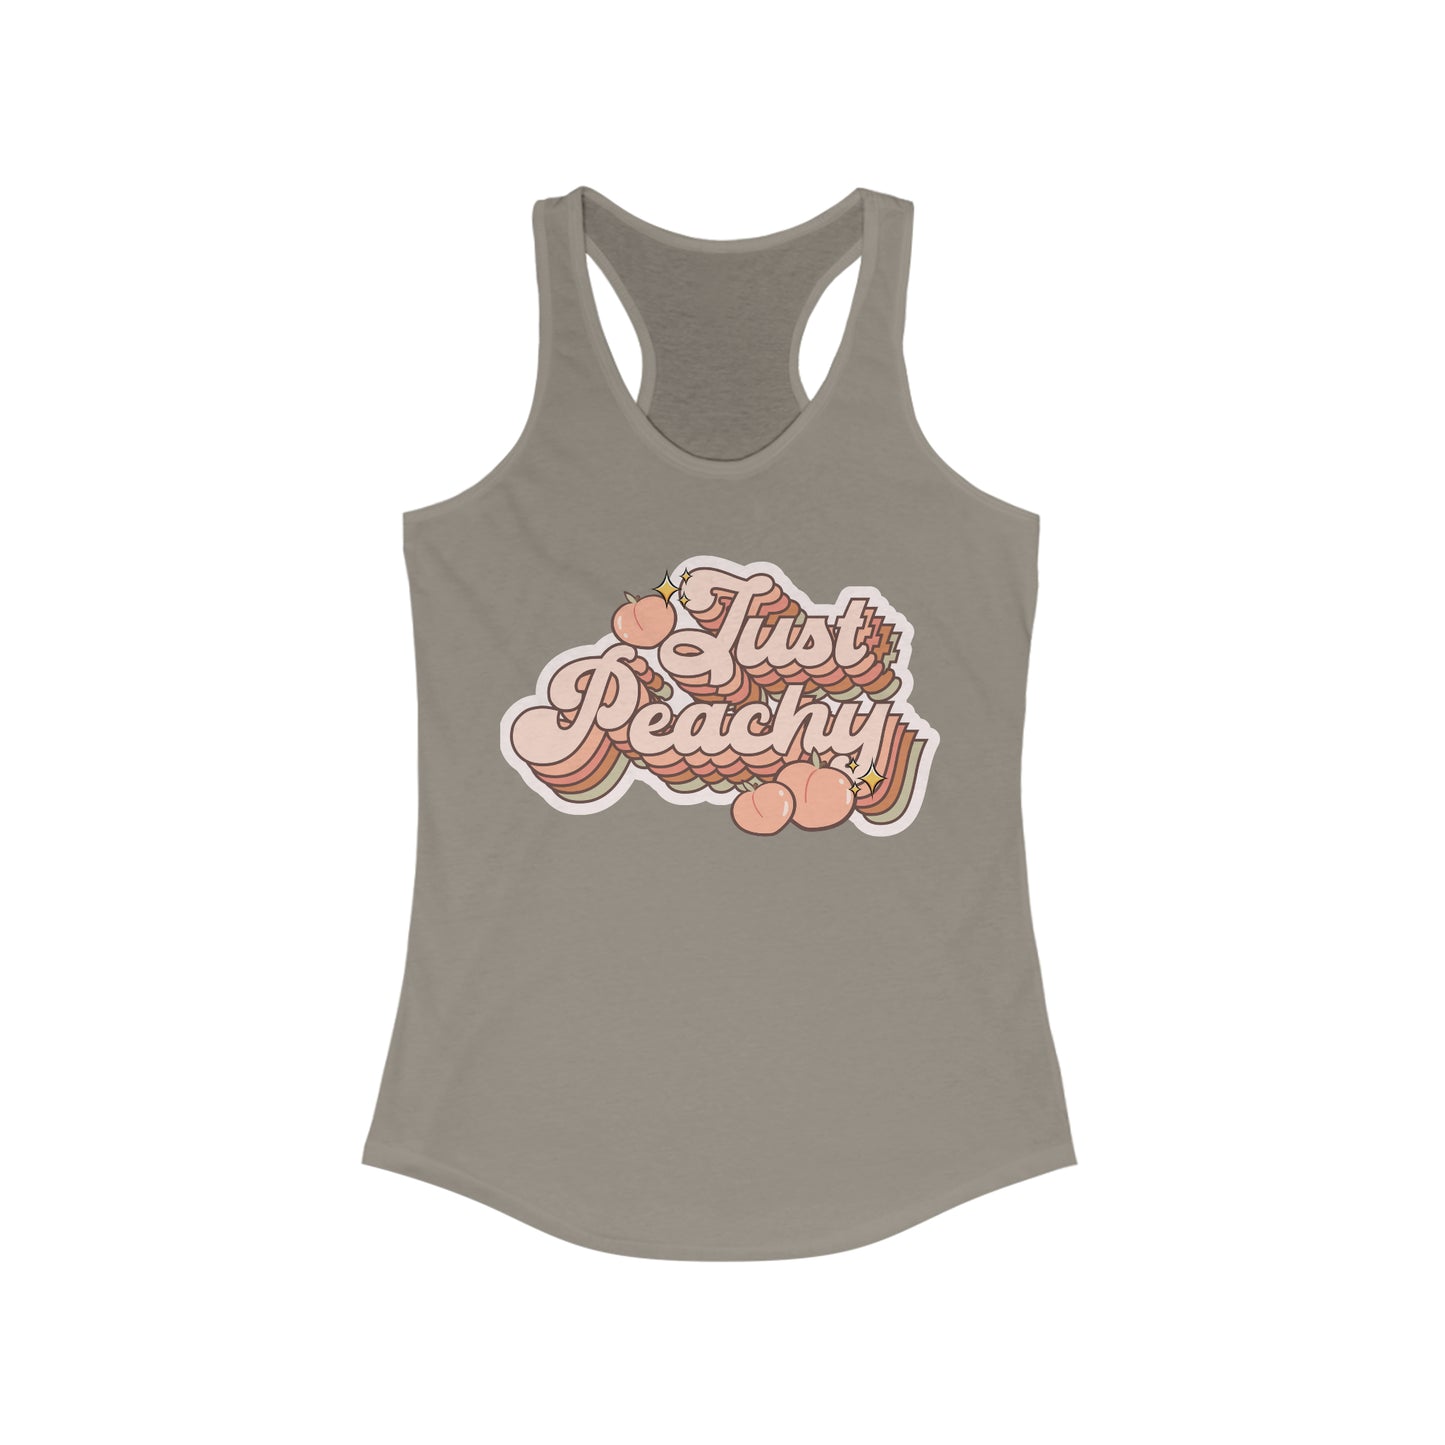 Just Peachy - Women's Ideal Racerback Tank